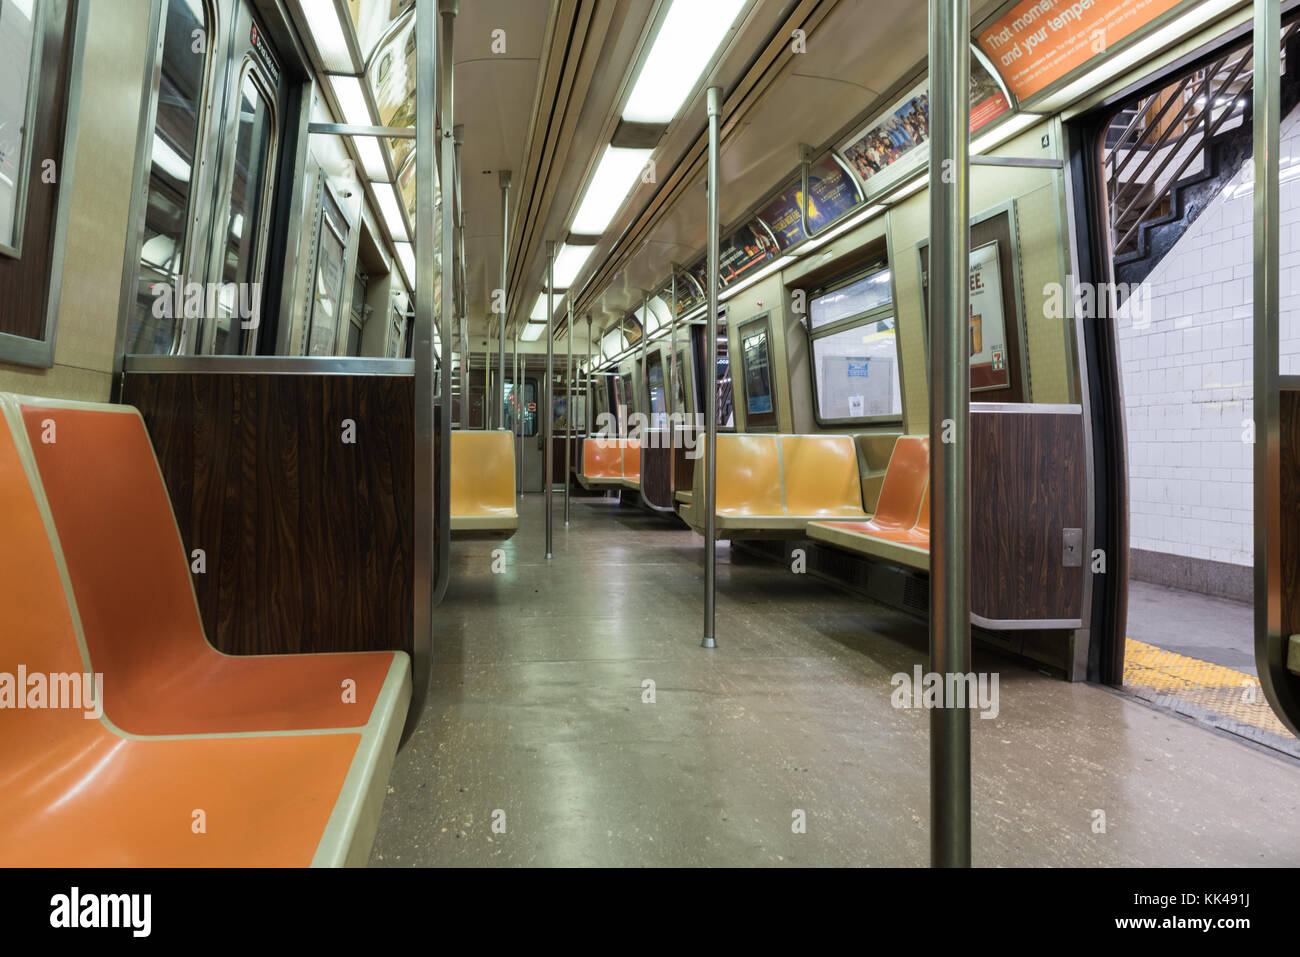 New York City Subway Car interior when empty. Stock Photo